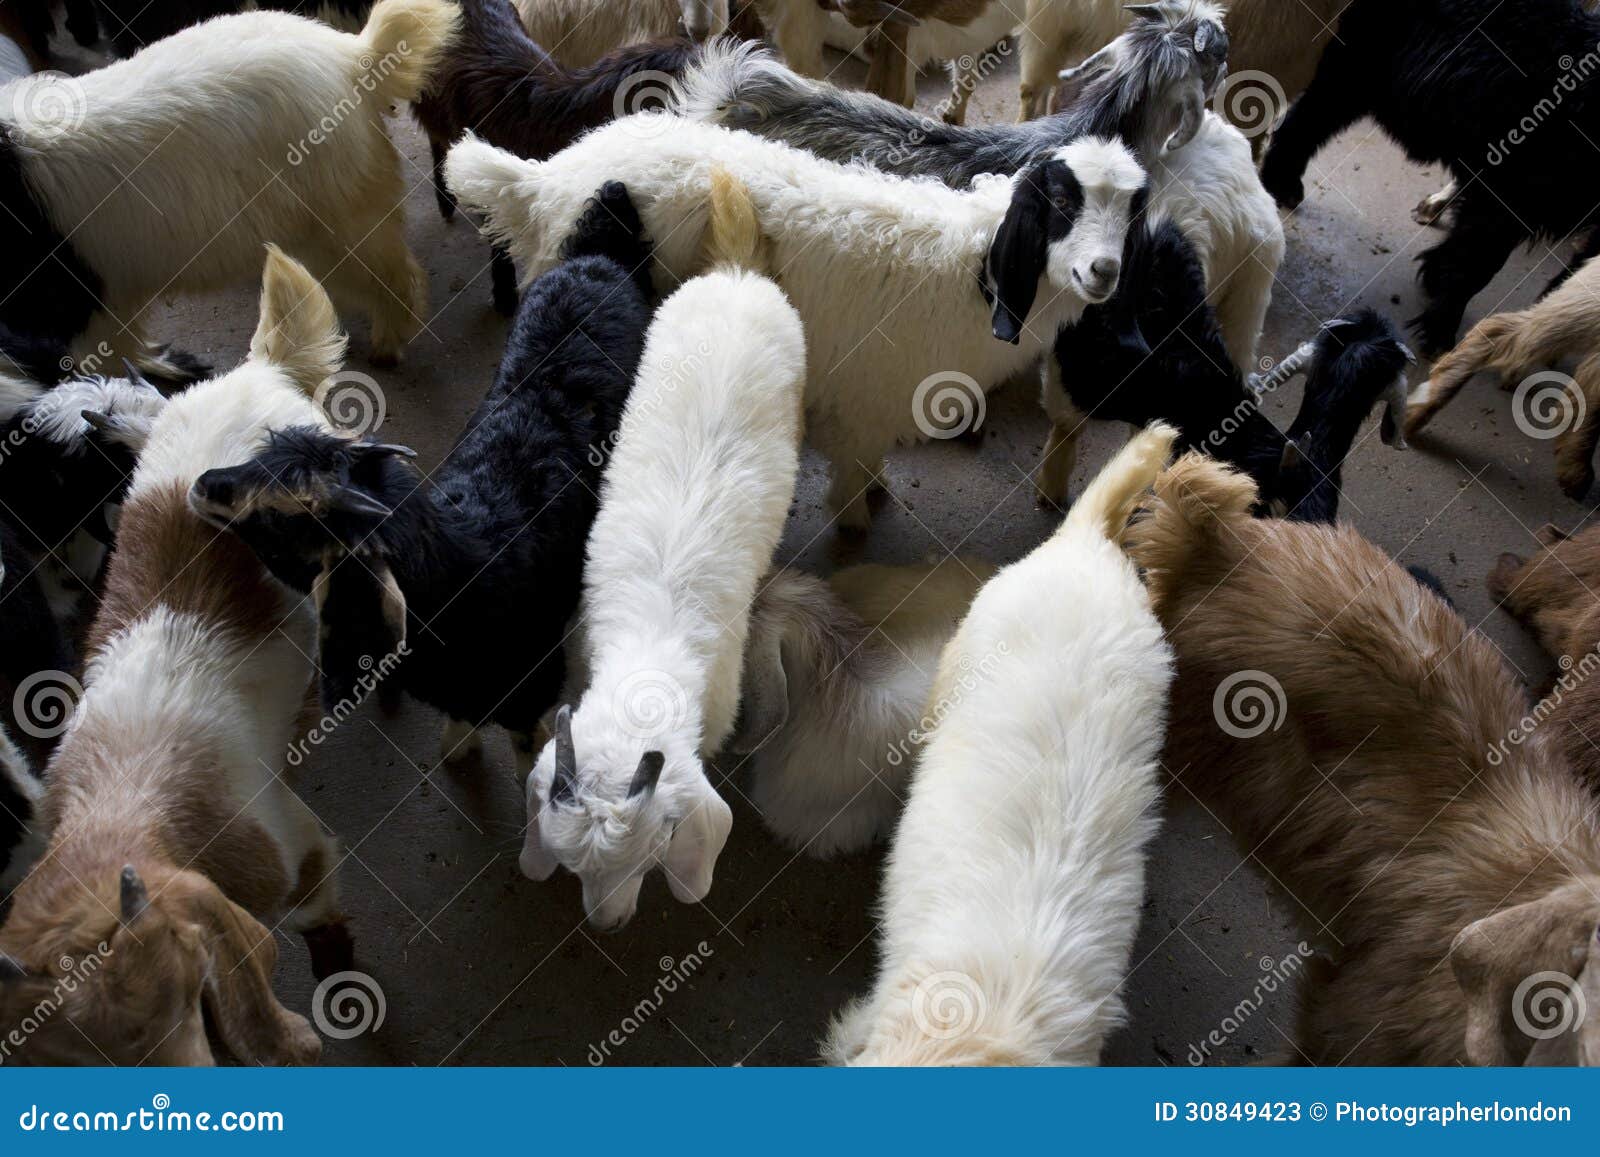 dubai uae goats for sale at shindagha market in bur dubai